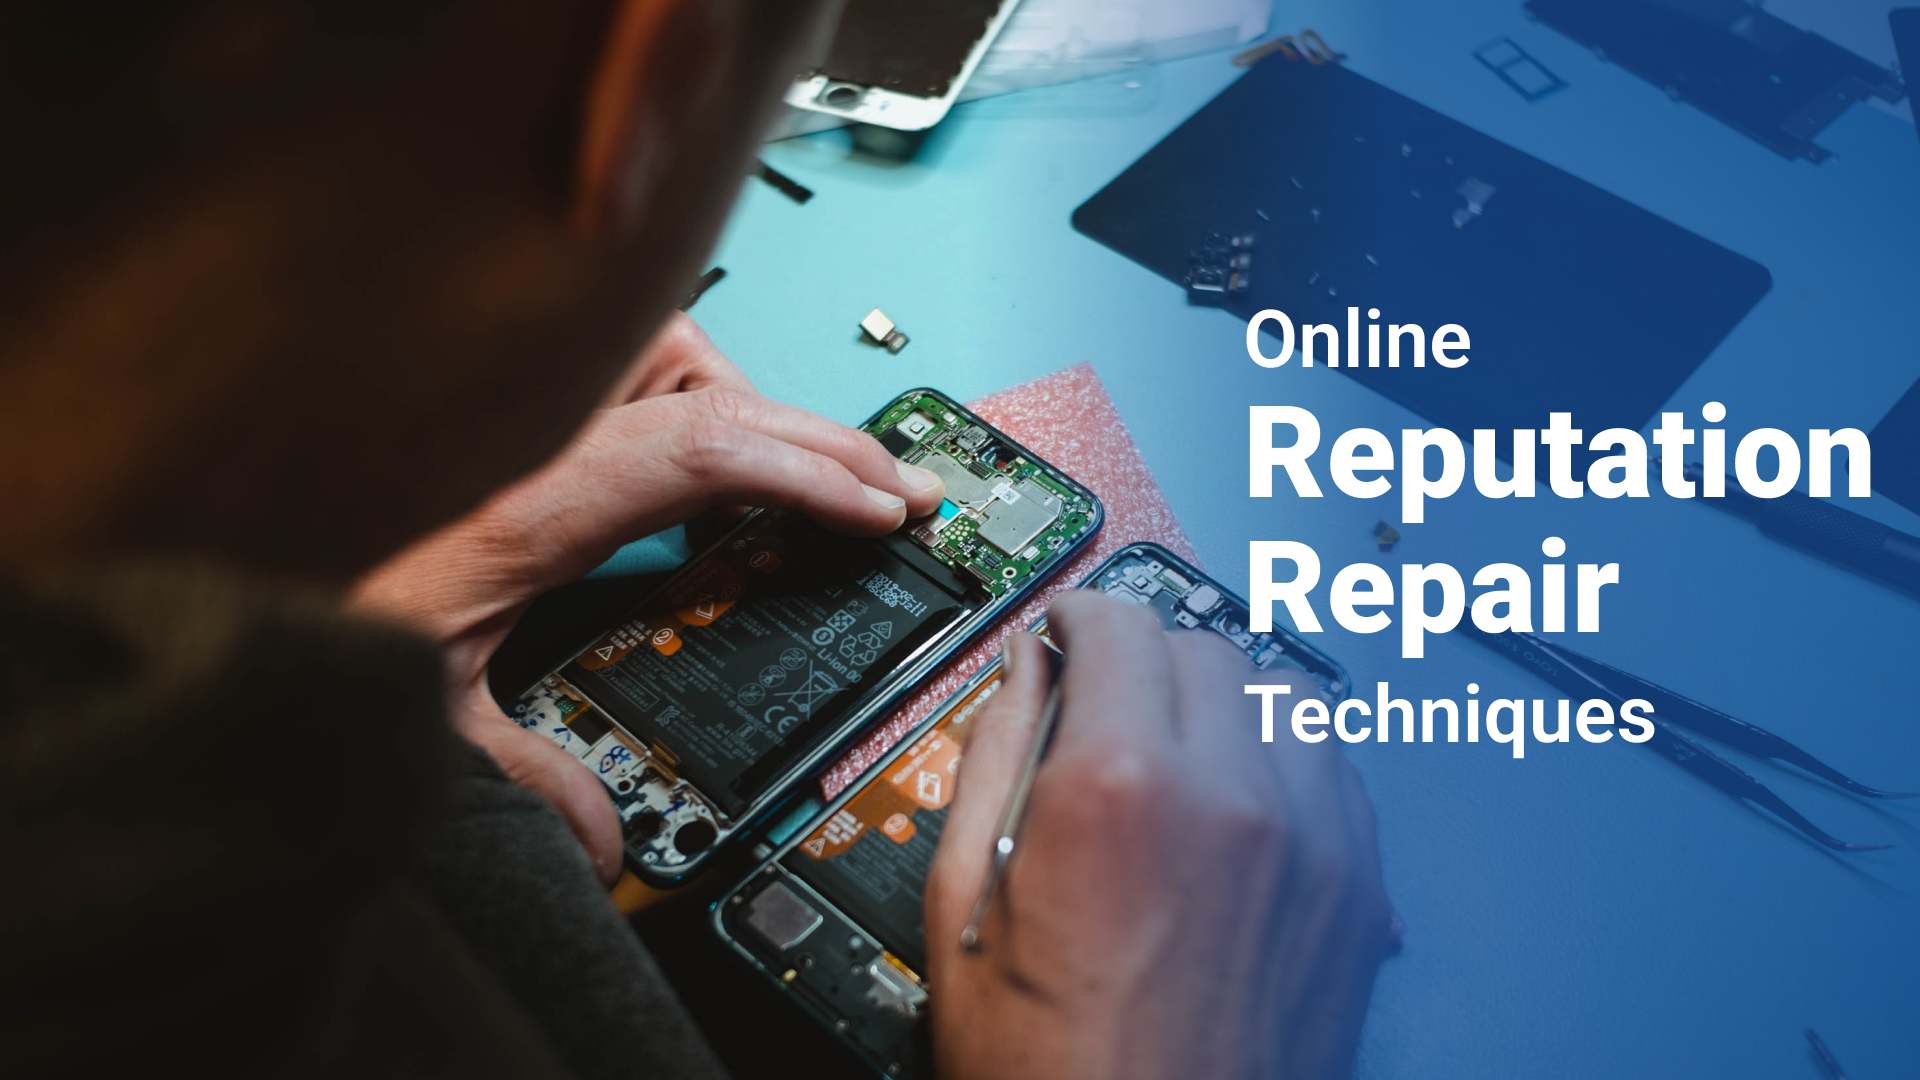 5 Best Techniques for Online Reputation Repair